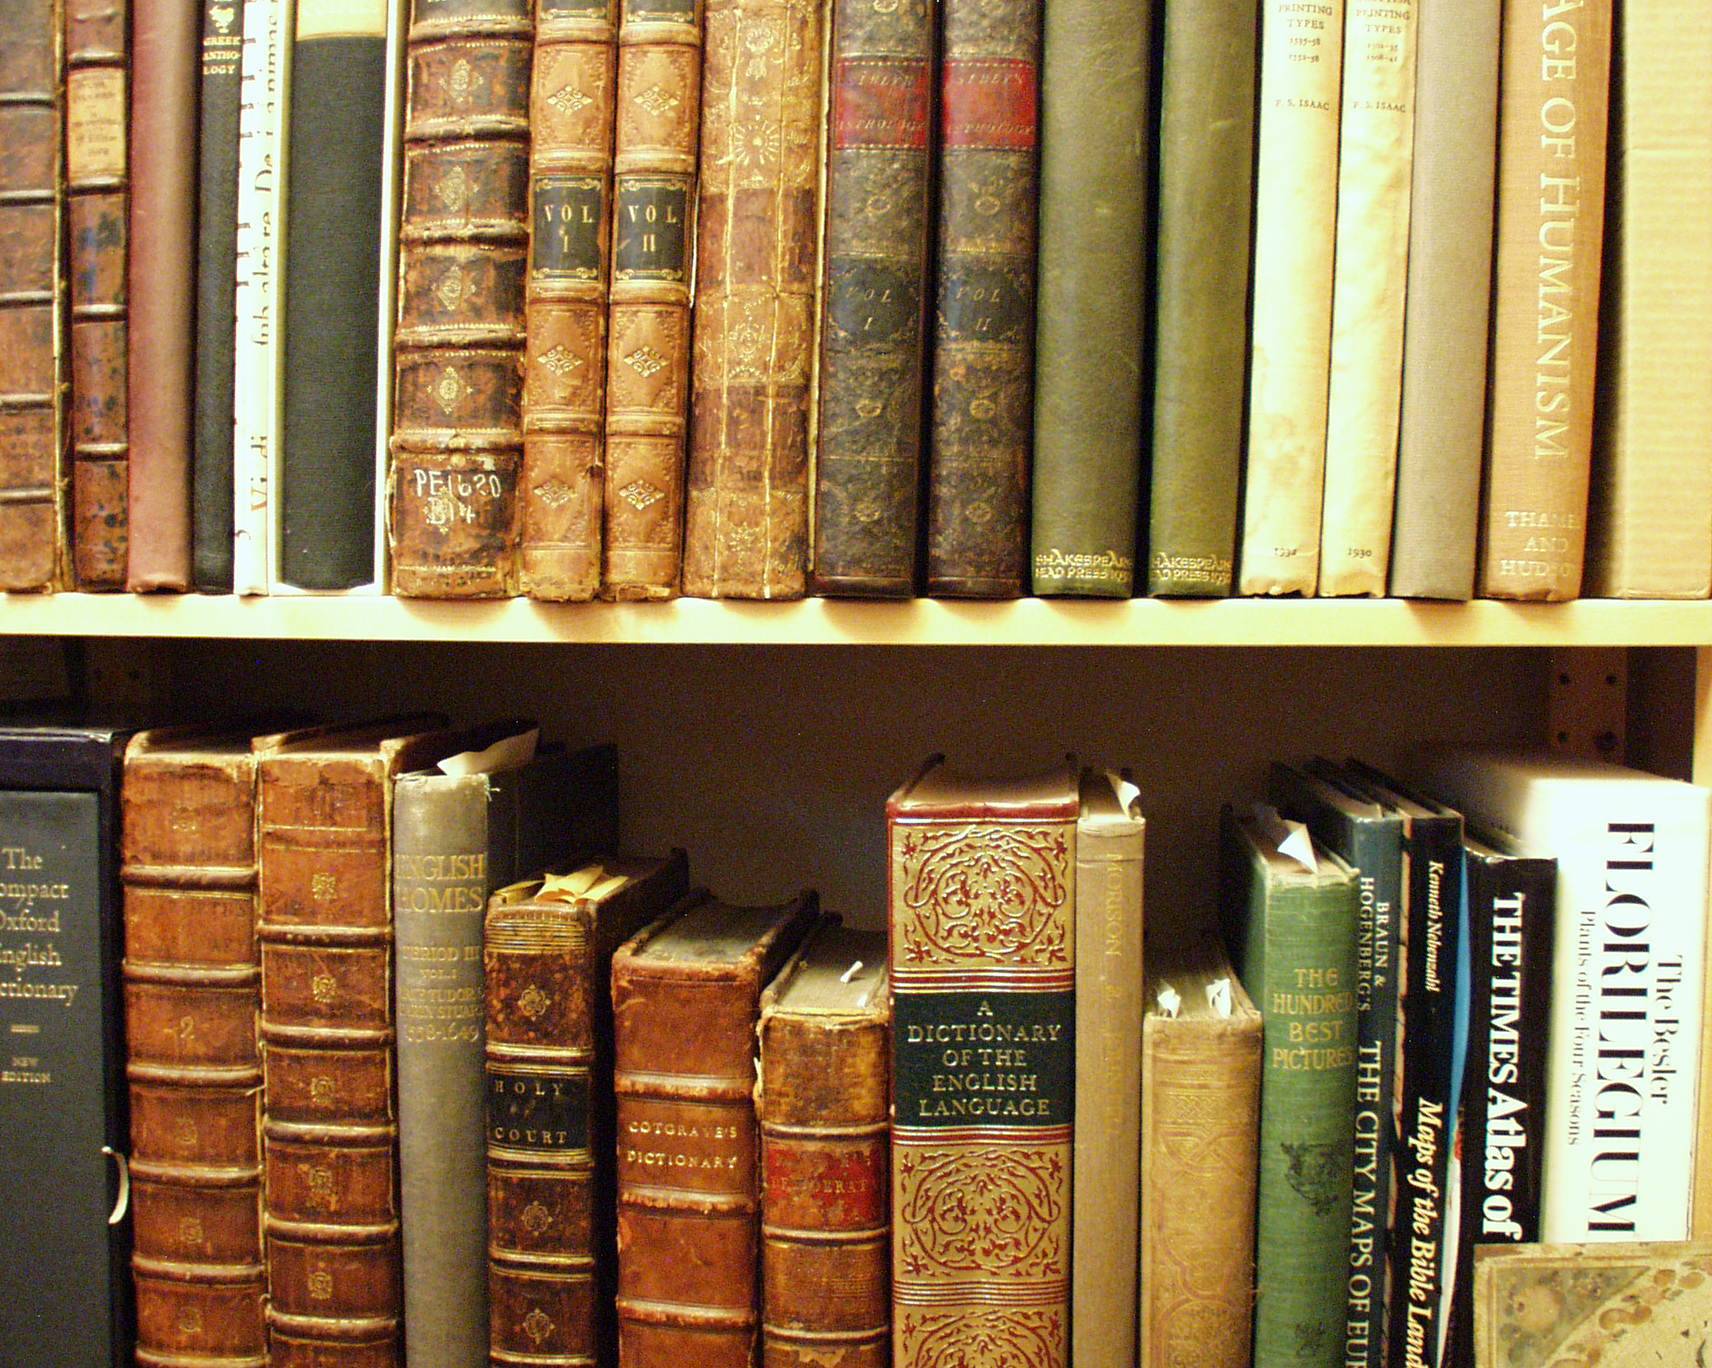 книги на полке, скачать фон, Books on a shelf texture background, books